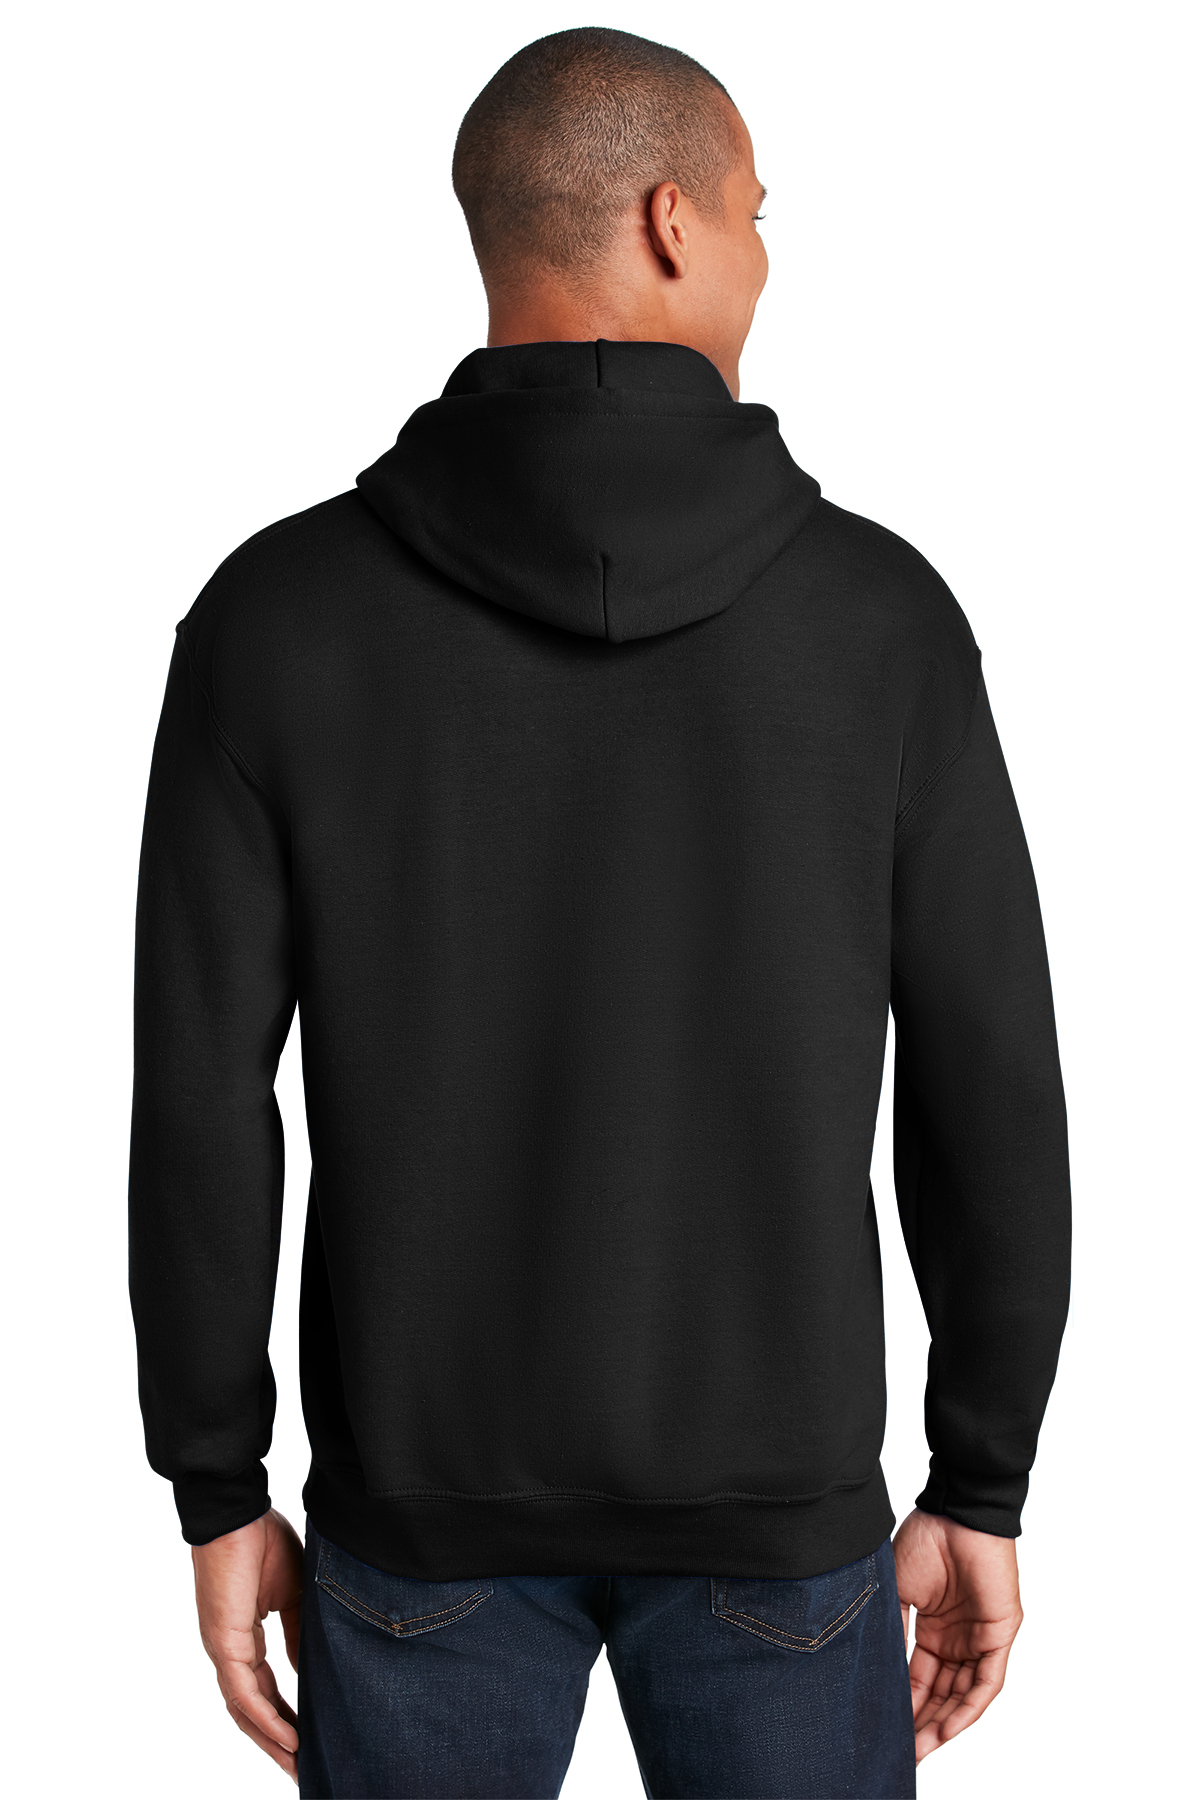 Gildan Heavy Blend Adult Hooded Sweatshirt 18500/88500 - Shirts and Prints  Ph